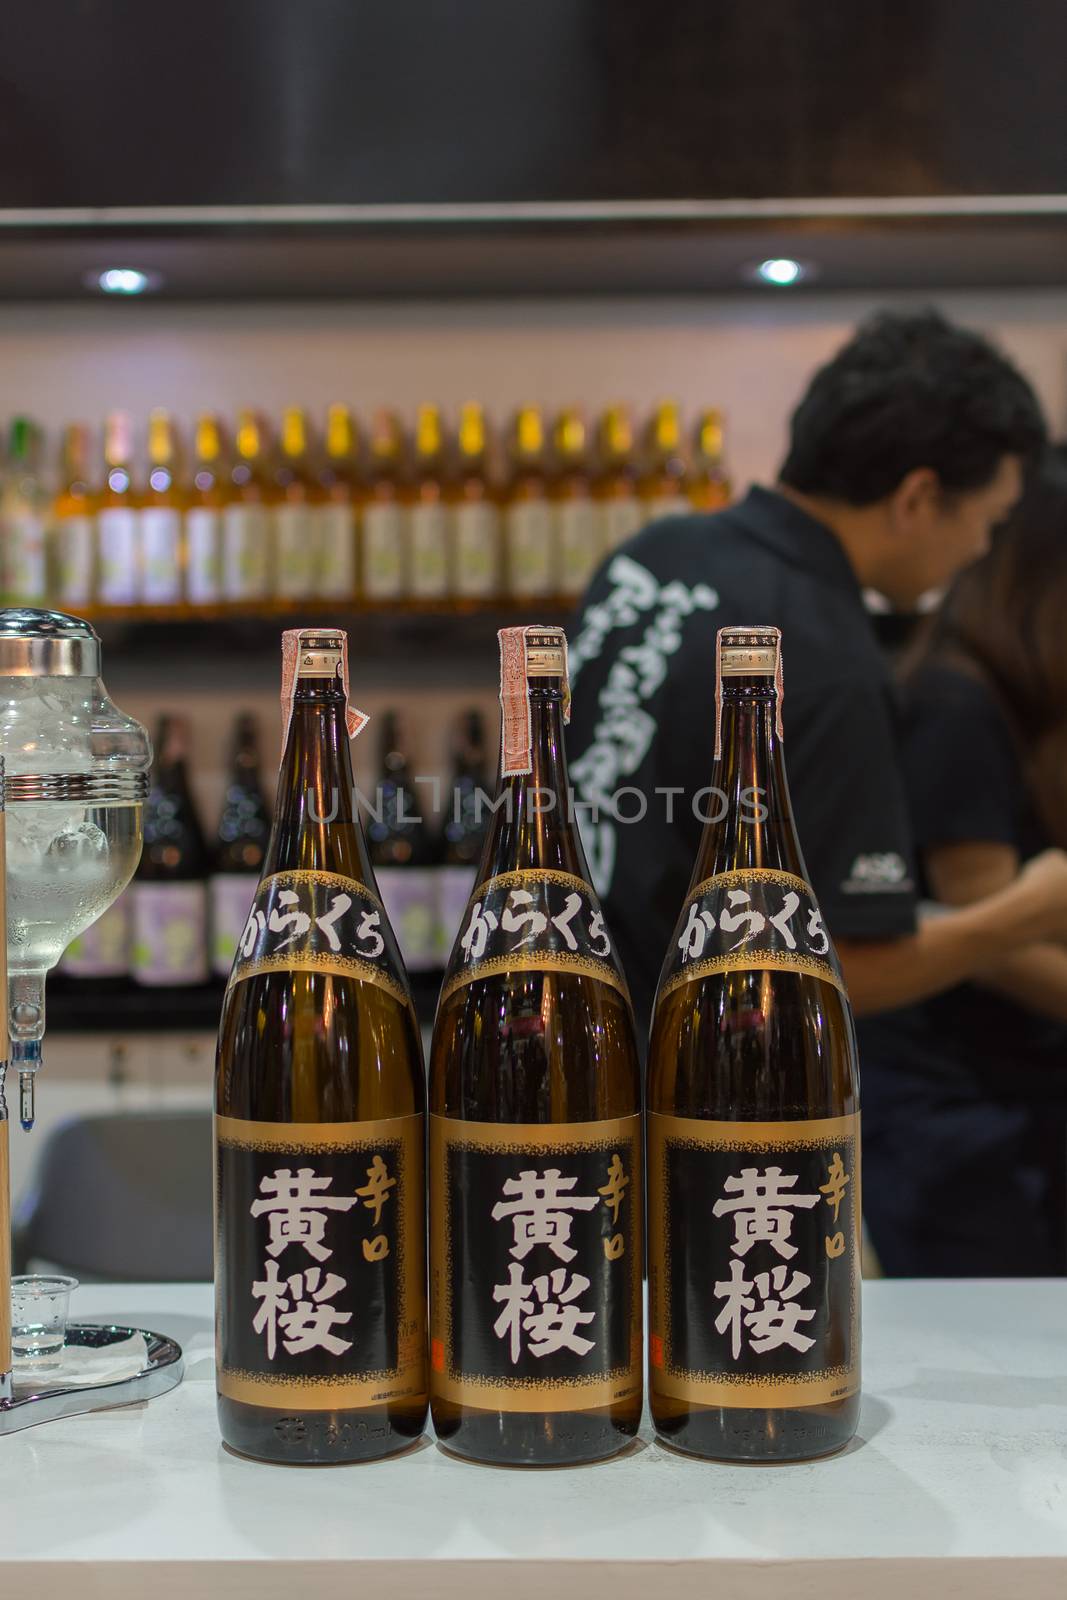 Bottles of japan liquor at the bar by PongMoji